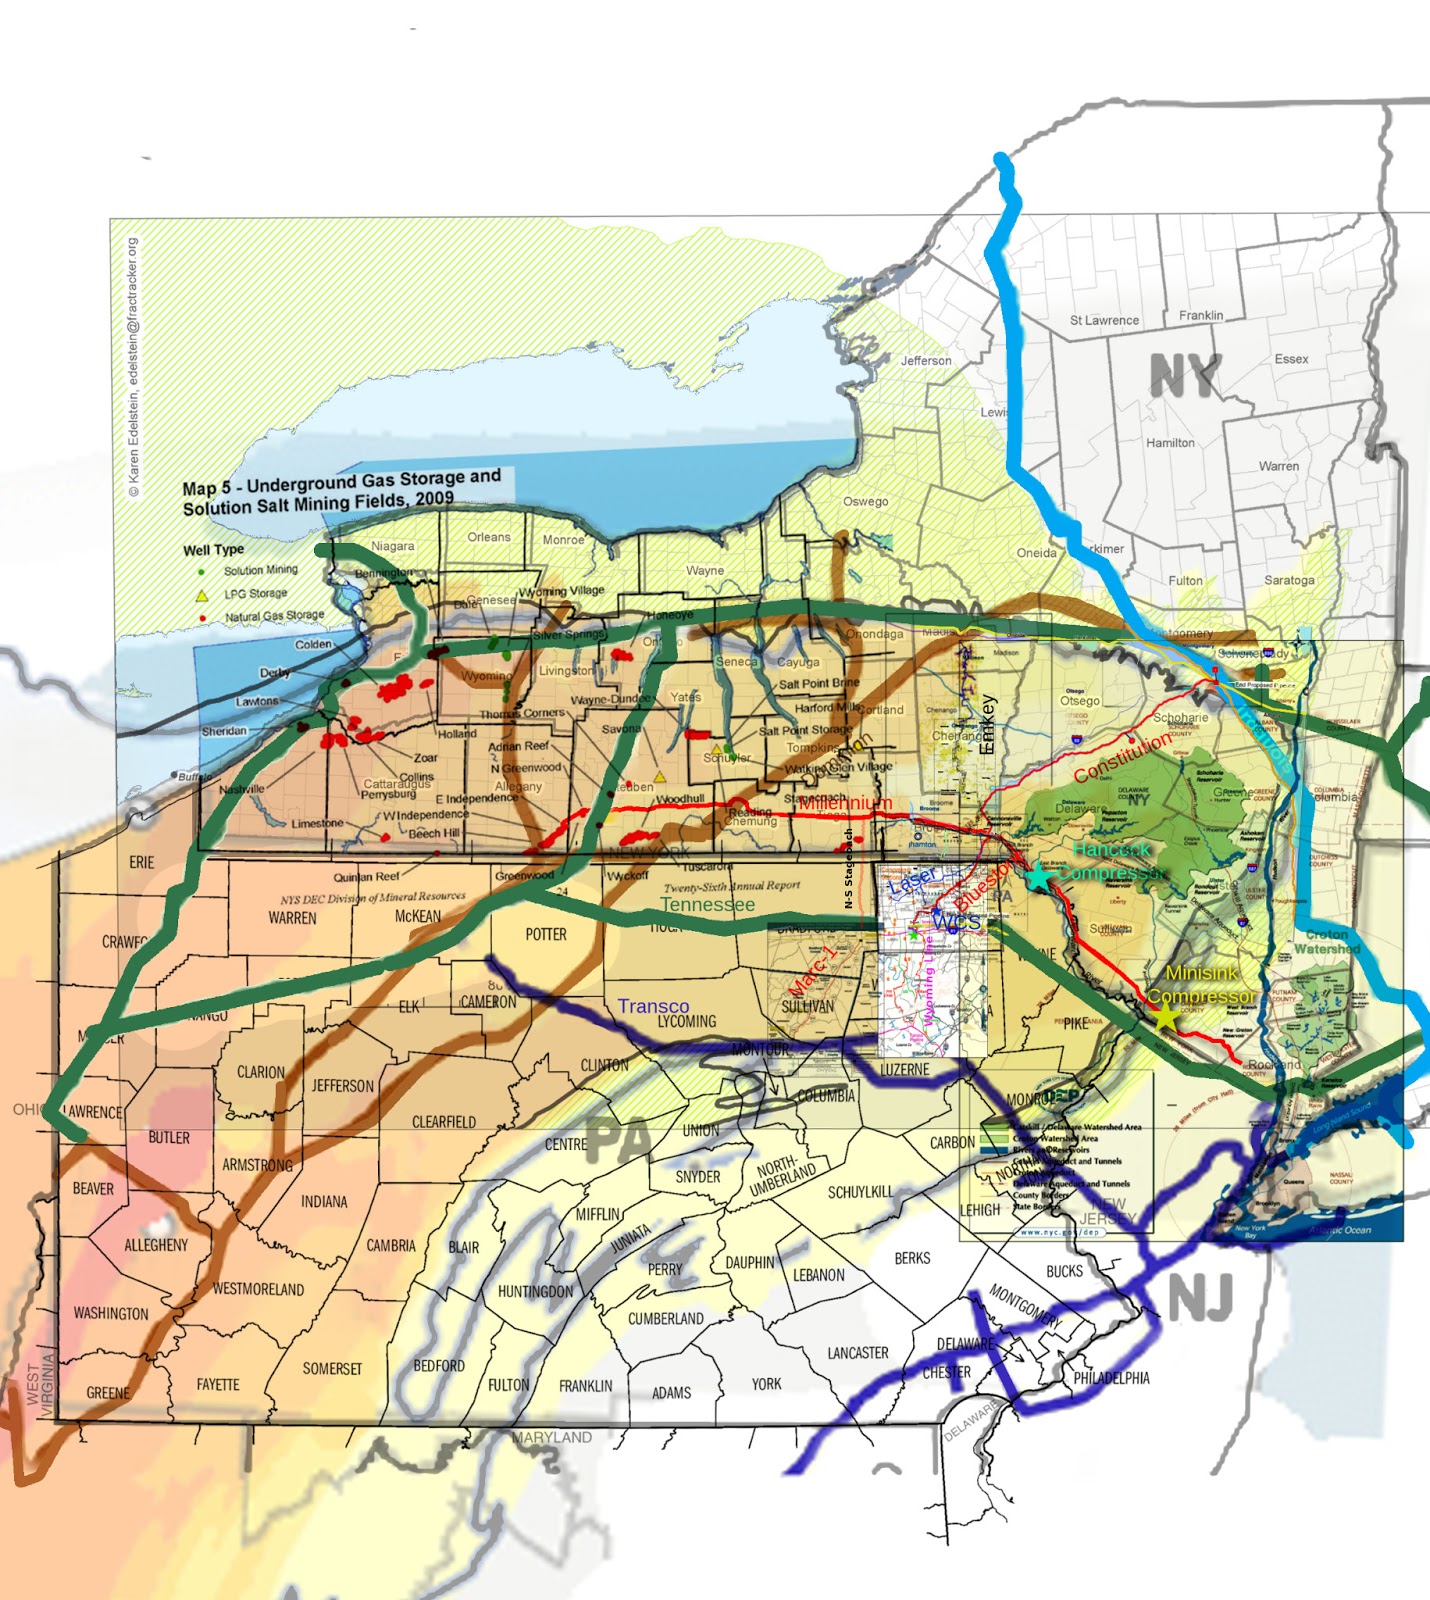 https://2.bp.blogspot.com/-yTaFbk0Kwoc/UPxsfb8EUaI/AAAAAAAABQA/kAT1smx9X8s/s1600/master+pipeline+map+regional-NY-PA-20-jan-2013.png